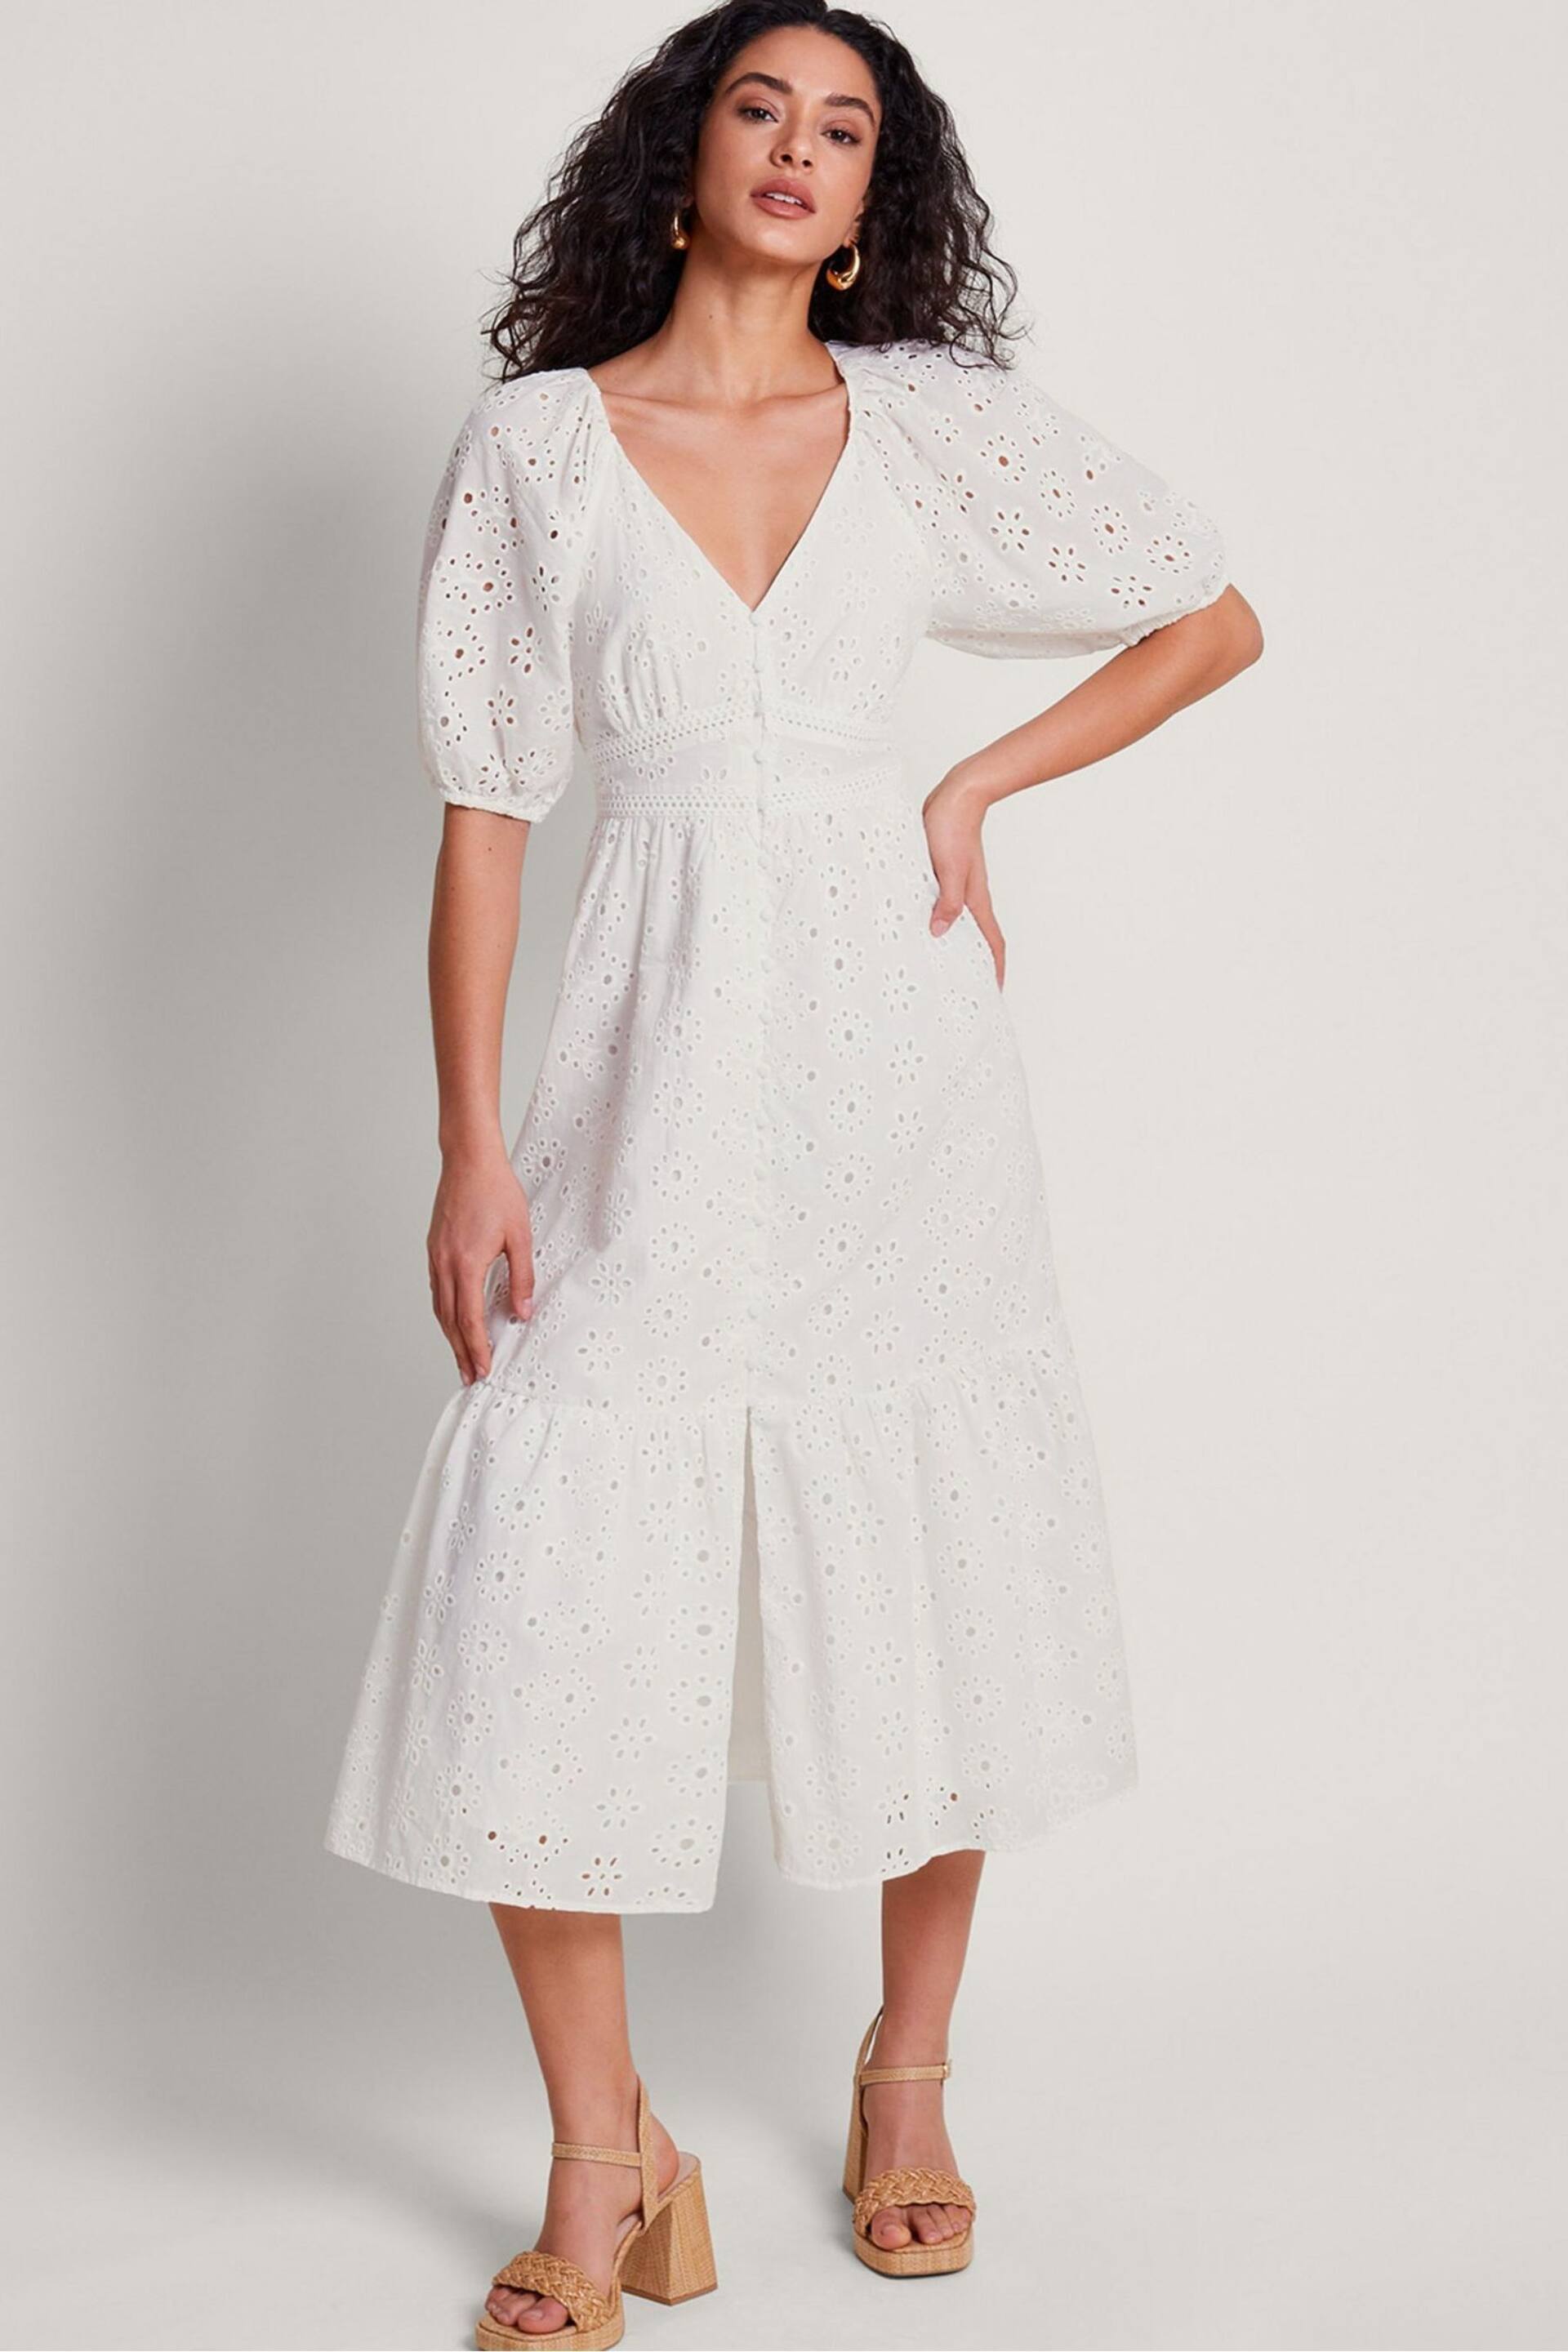 Monsoon White Broderie Bettie Dress - Image 1 of 4